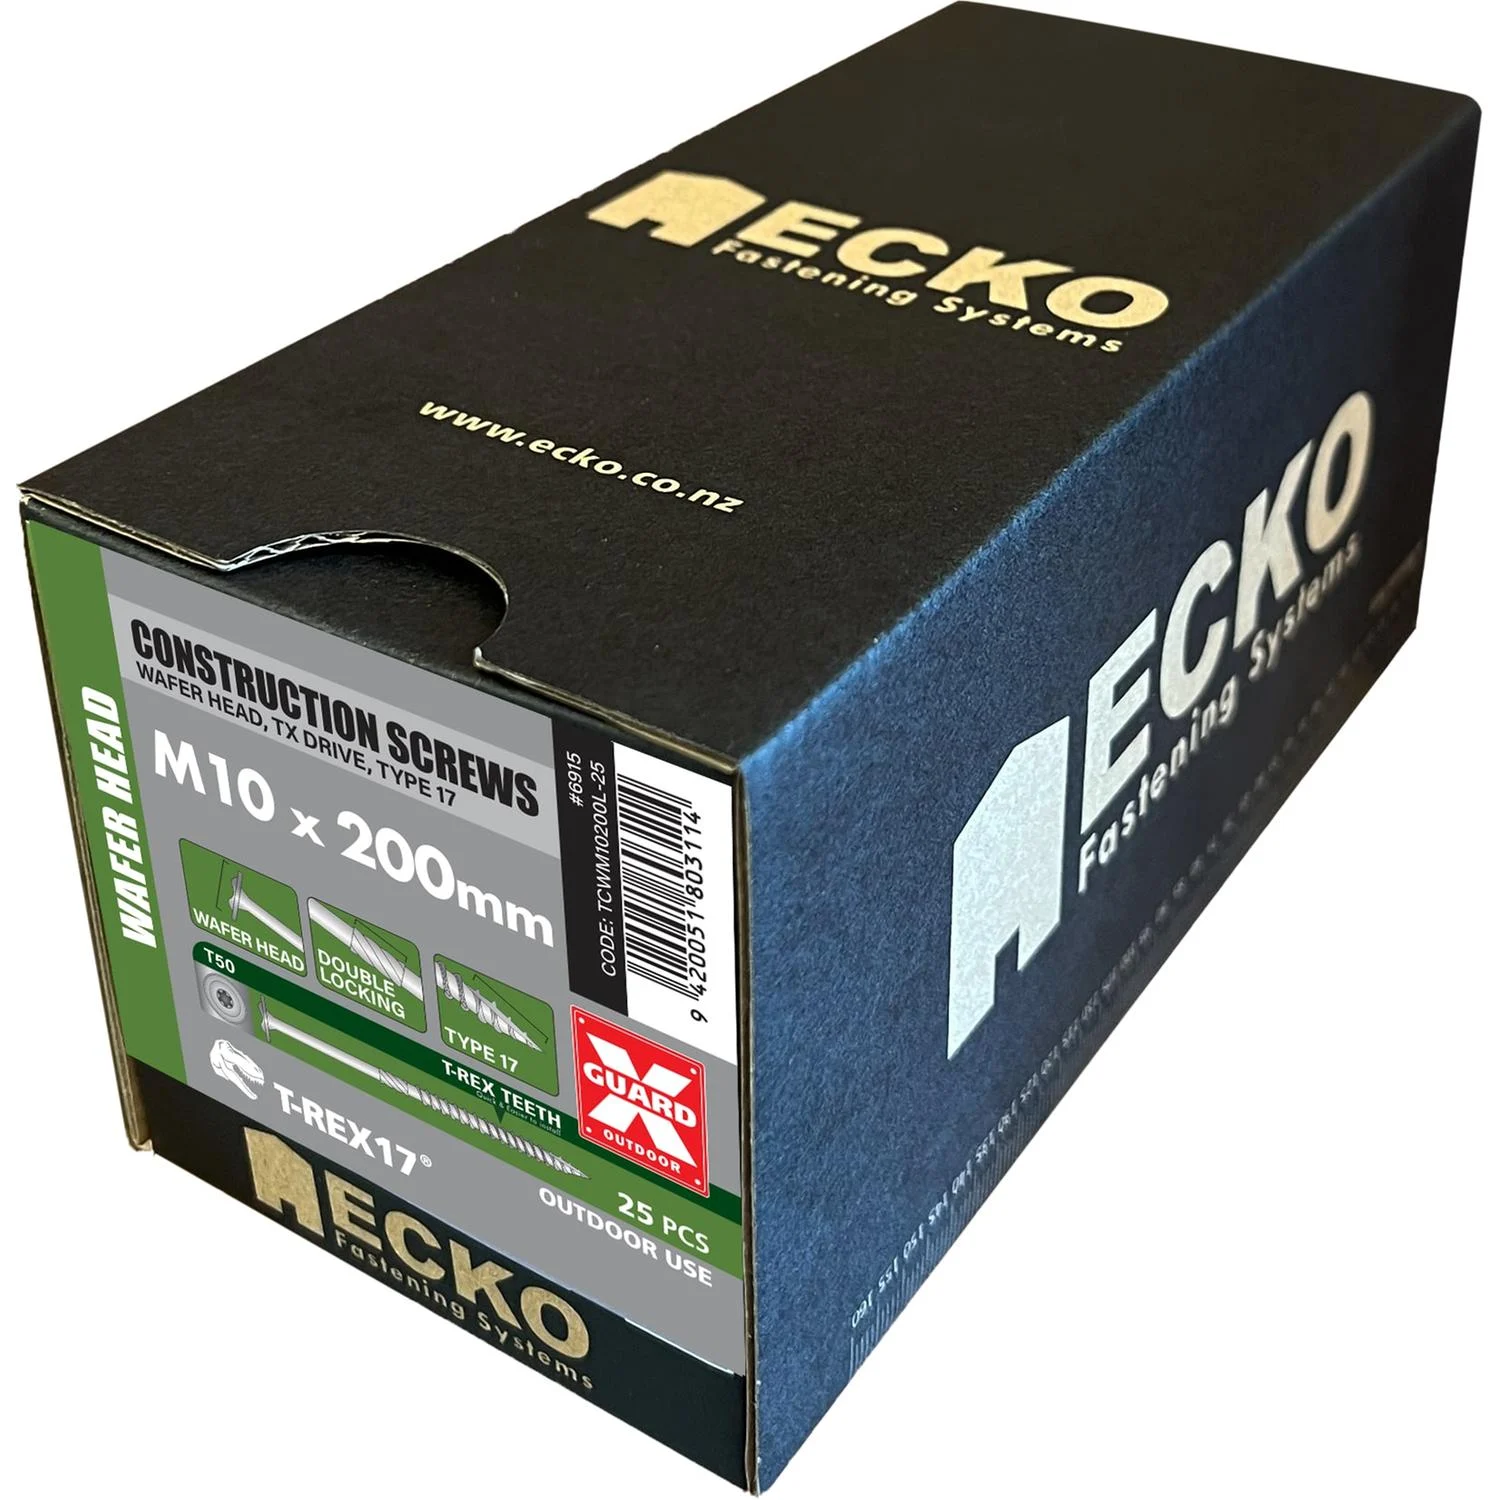 Ecko T-Rex17 Construction Screws M8 X 200Mm (500 Pack)